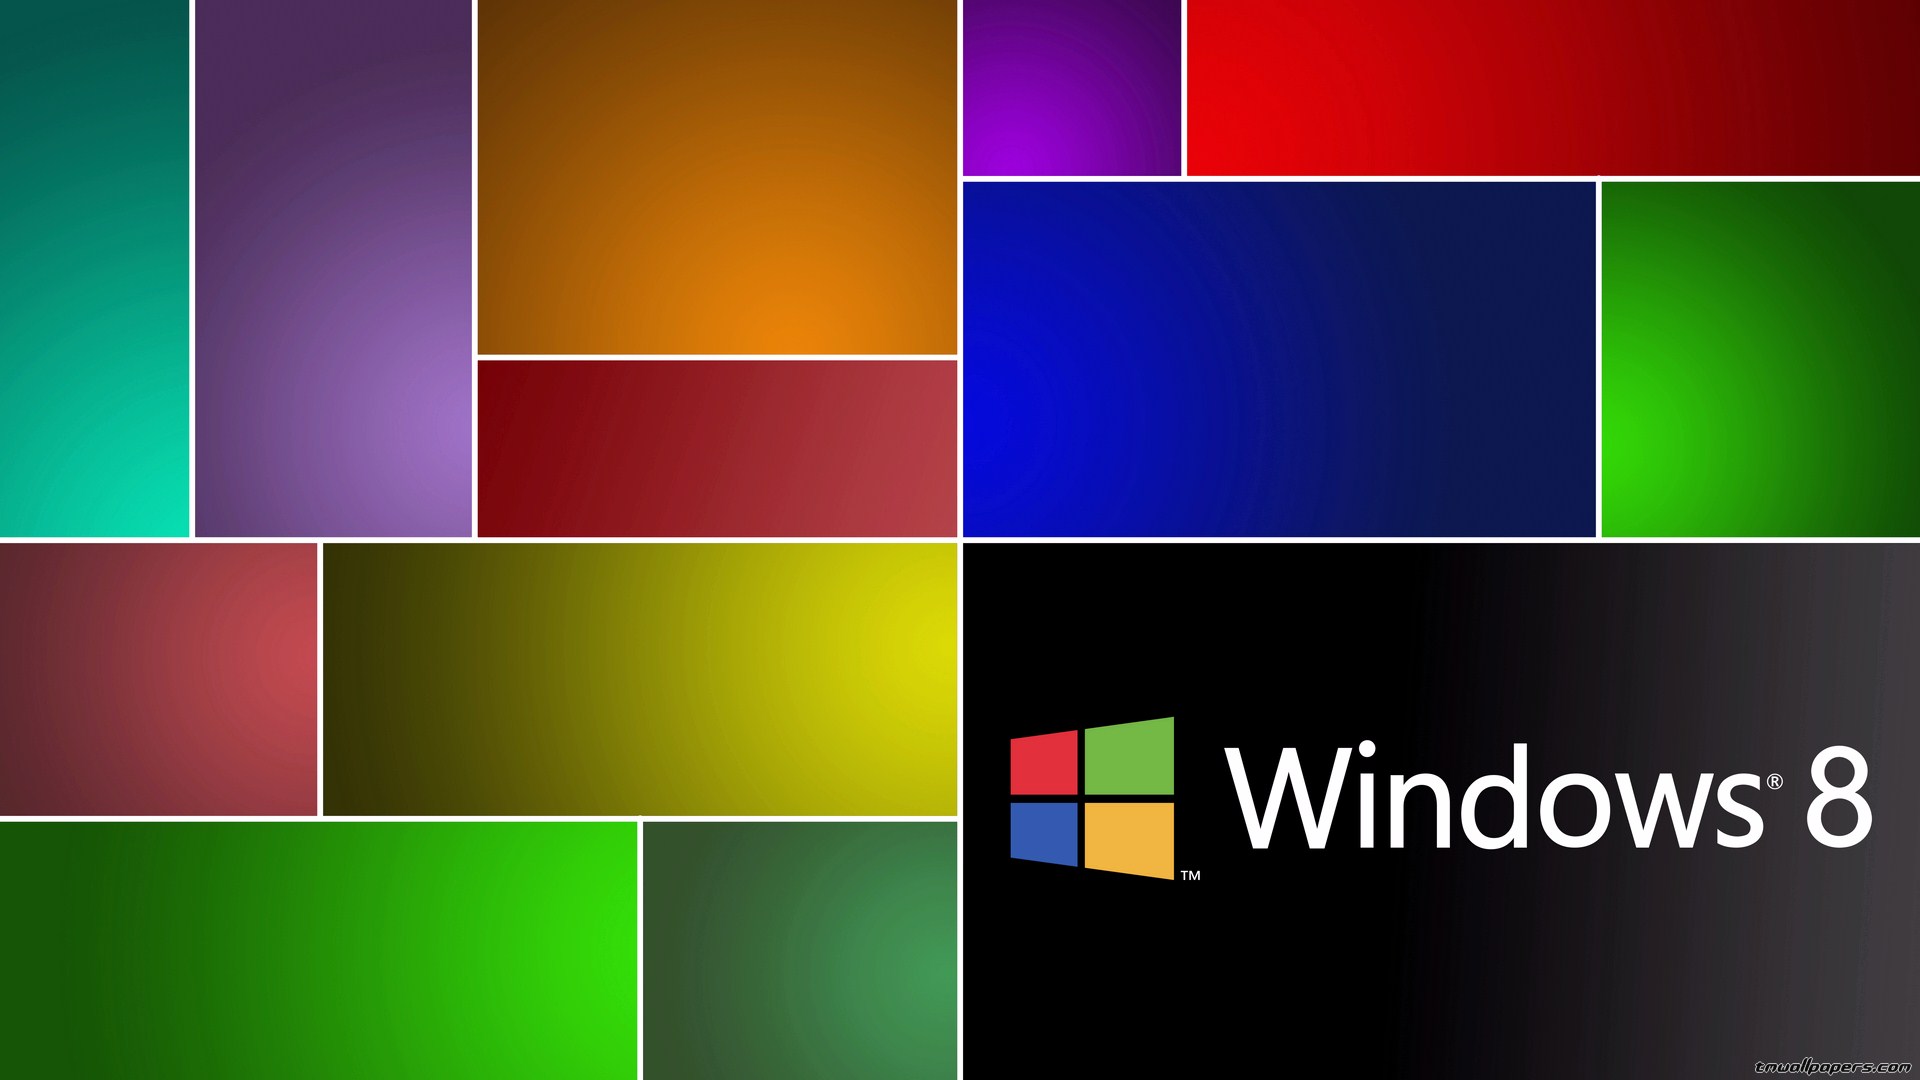 Windows 8 Wallpaper 1920x1080 Wide wallpapers windows 8